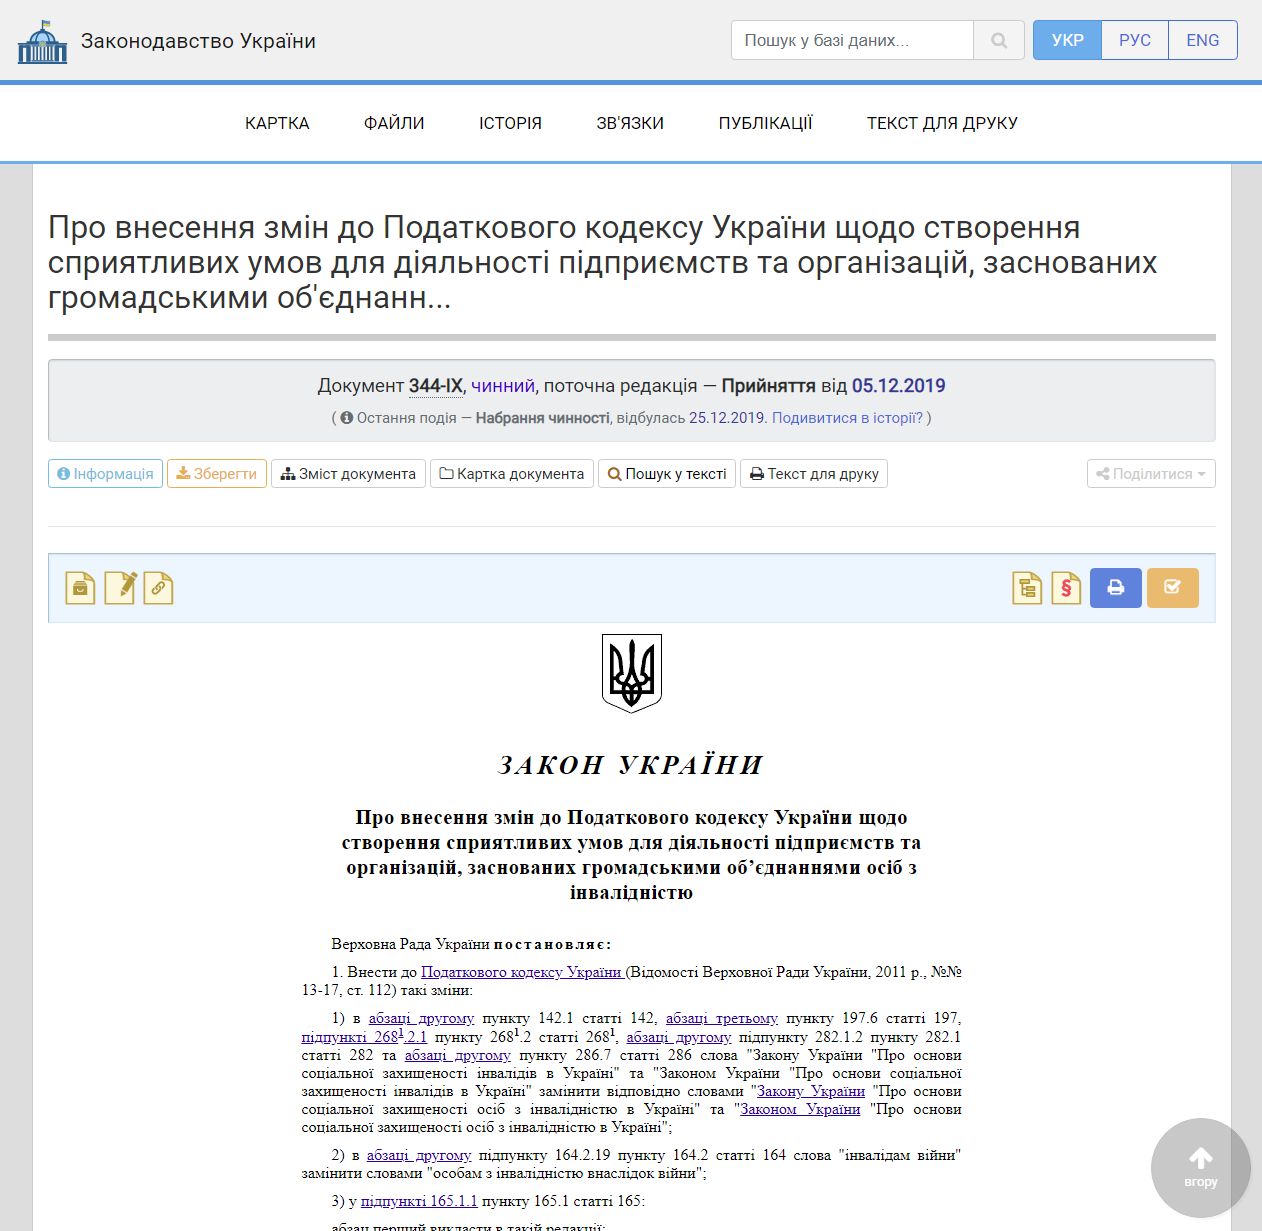 https://zakon.rada.gov.ua/laws/show/344-20#n2